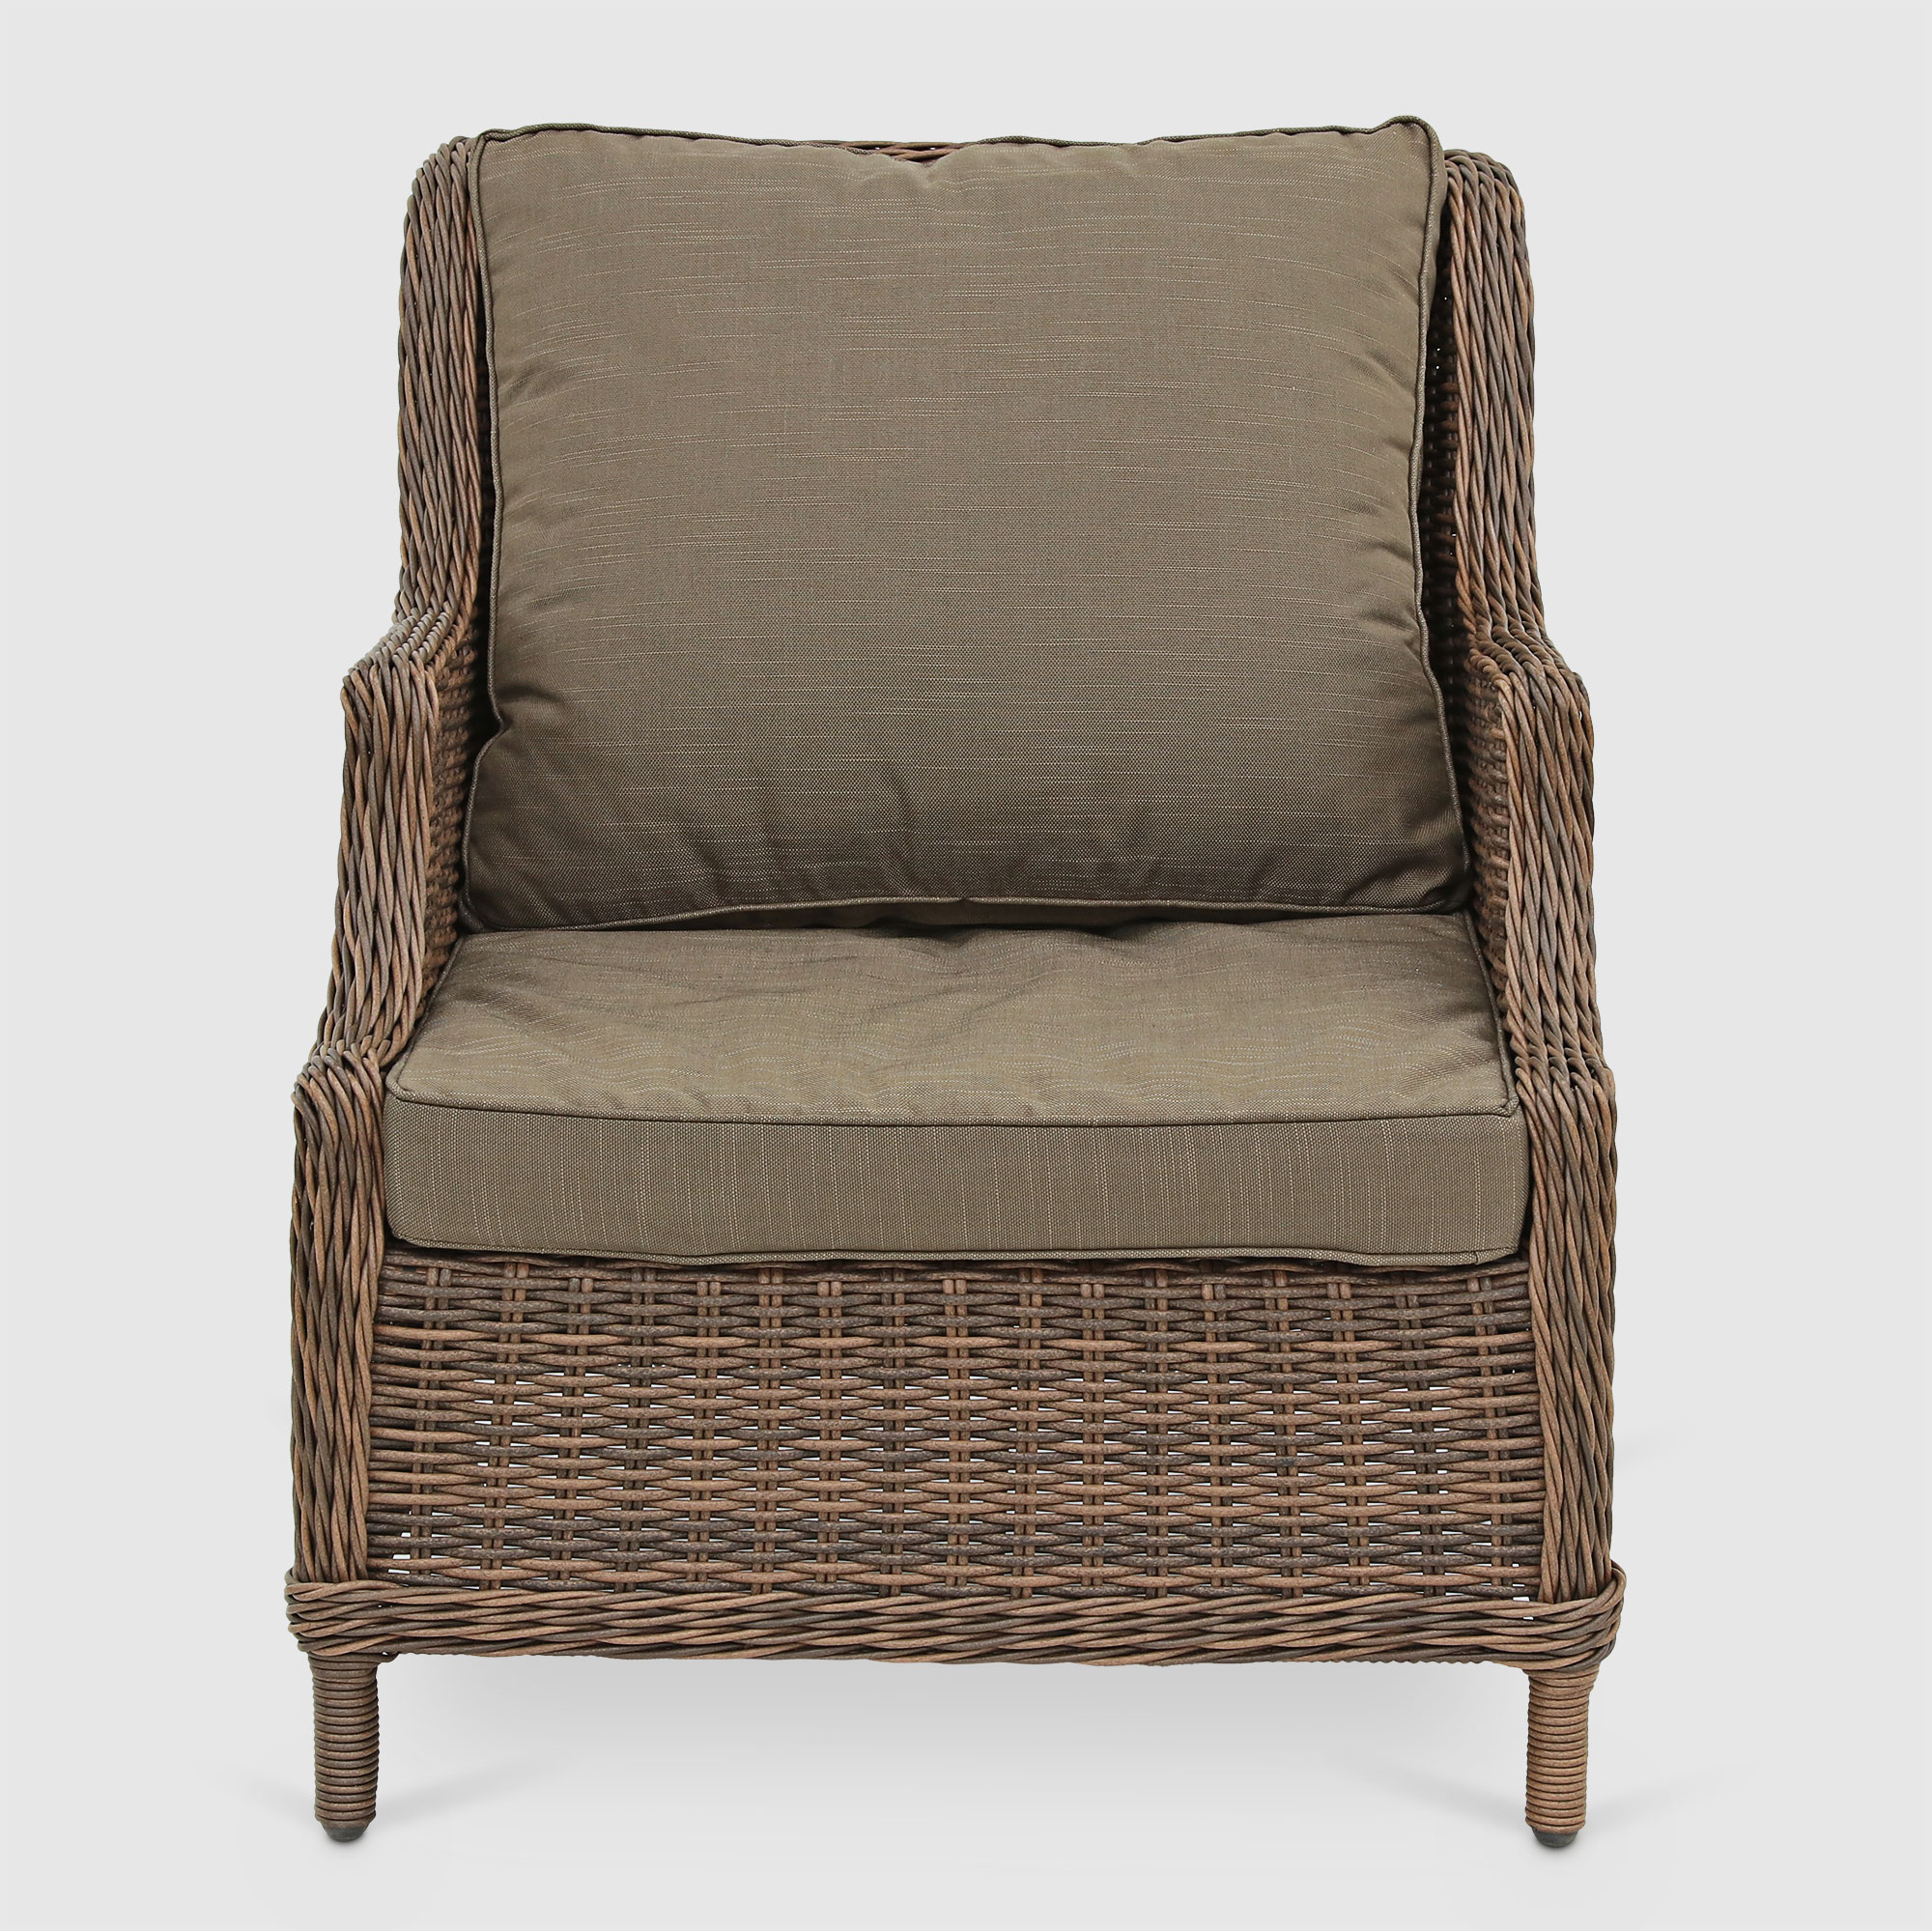 Комплект мебели Yuhang кресло + оттоманка + 2 софы + 2 стола, цвет серо-коричневый, размер 150х86х89; 208х80х87 - фото 4